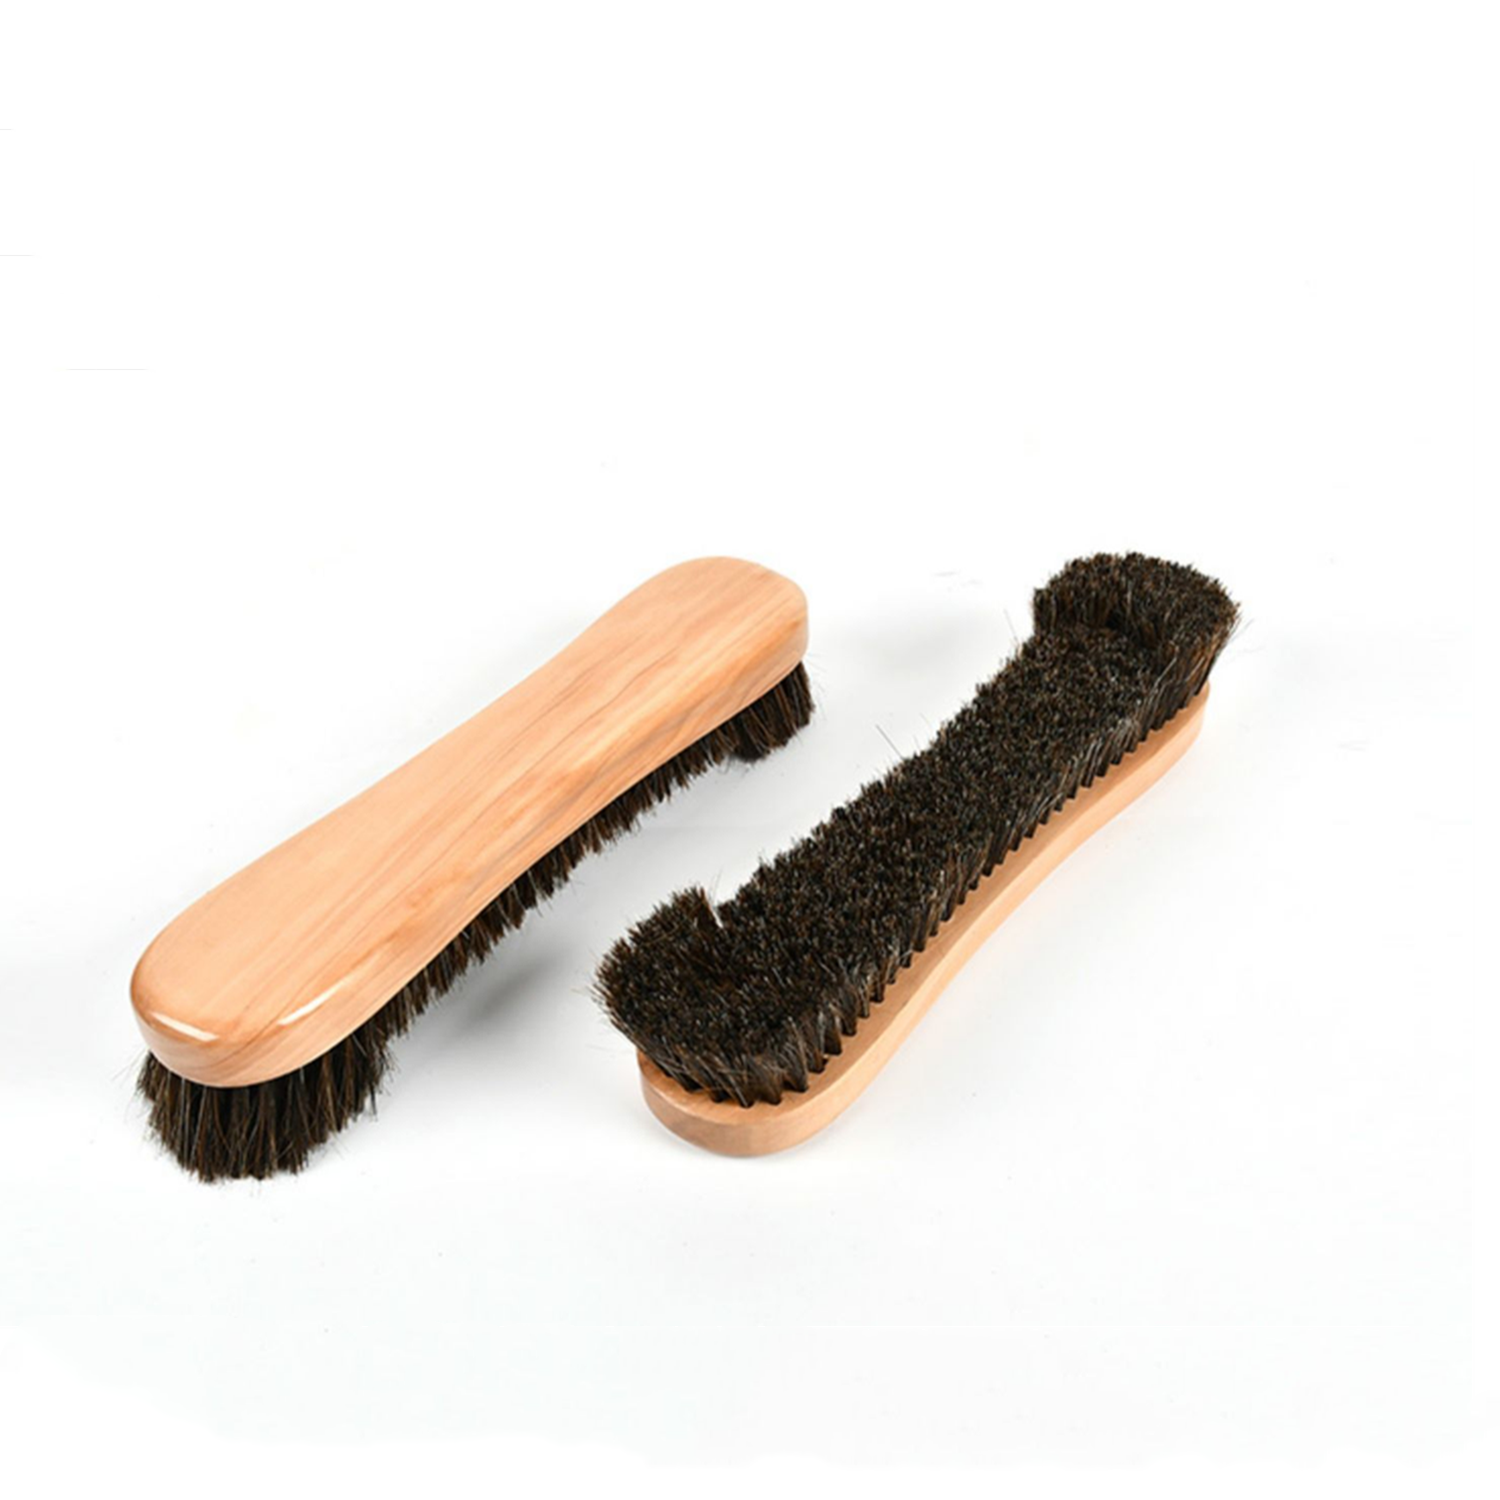 Wooden Pool/Billiard Brush Synthetic Horse Hair Bristles 12 Inch